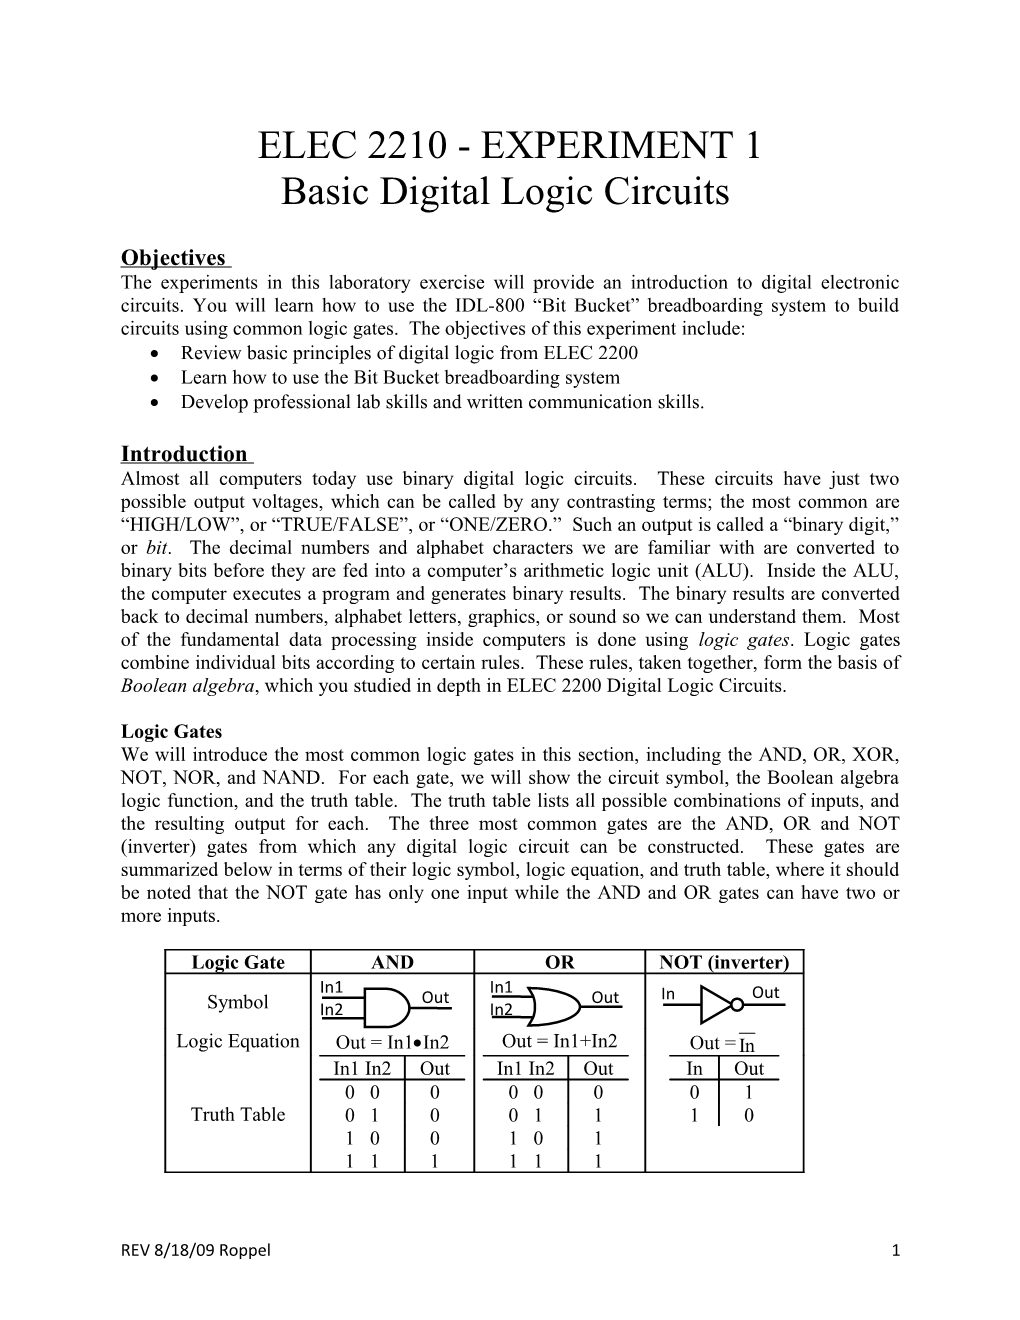 Basic Digital Logic Circuits